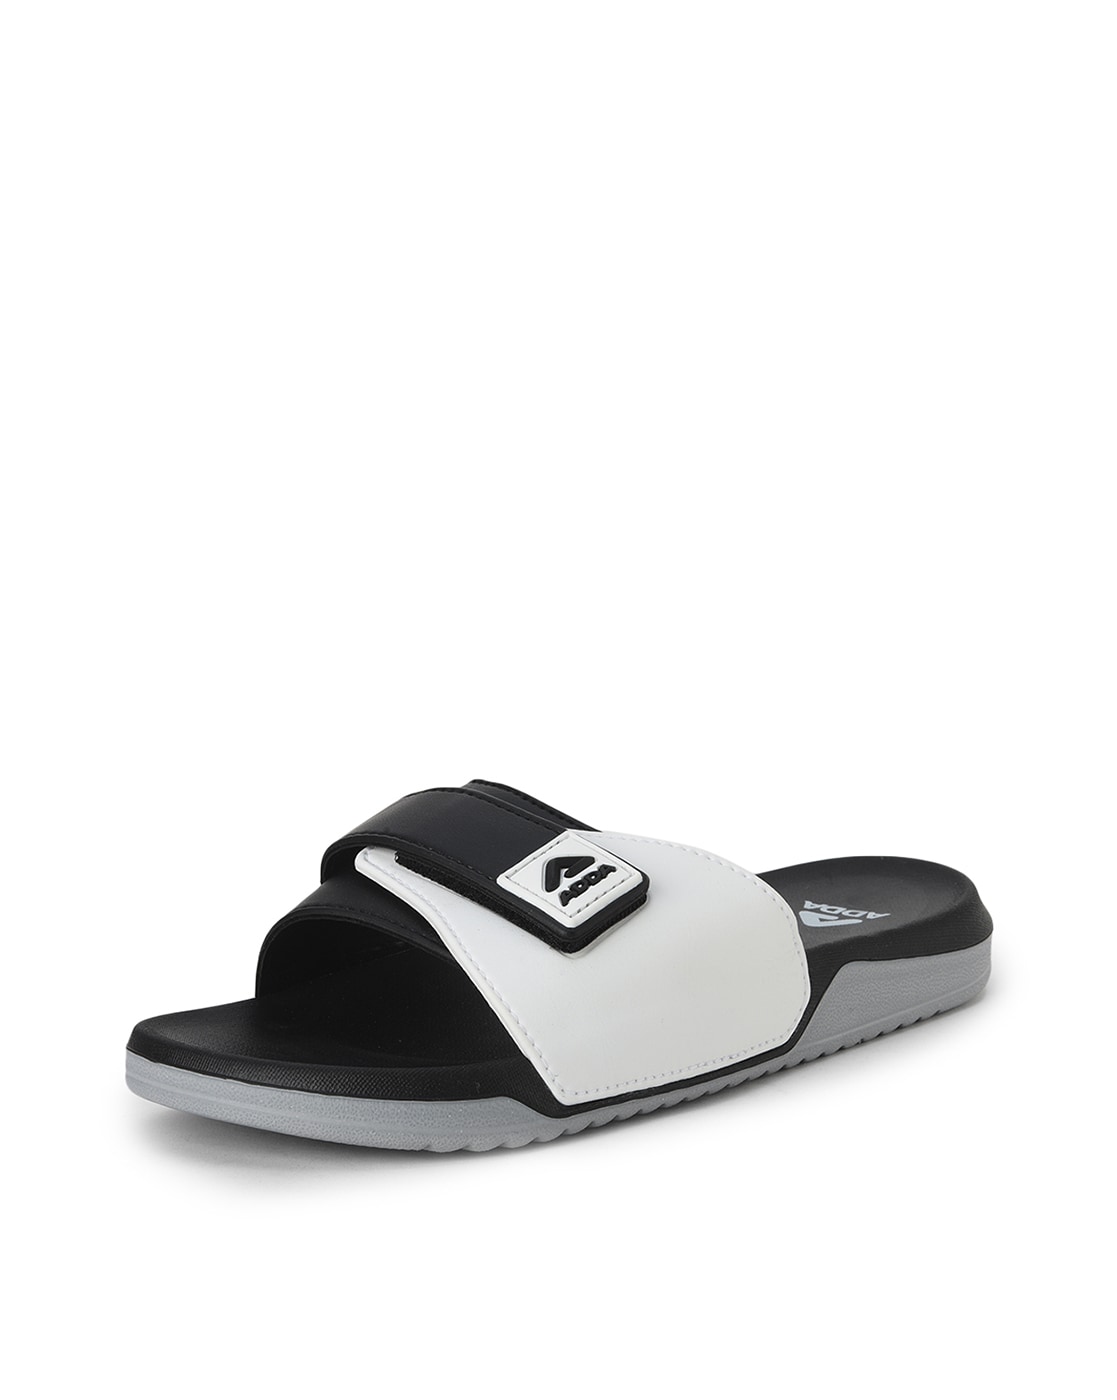 Adda Slippers  Buy Adda Slippers Online at Best Price  Shop Online for  Footwears in India  Flipkartcom